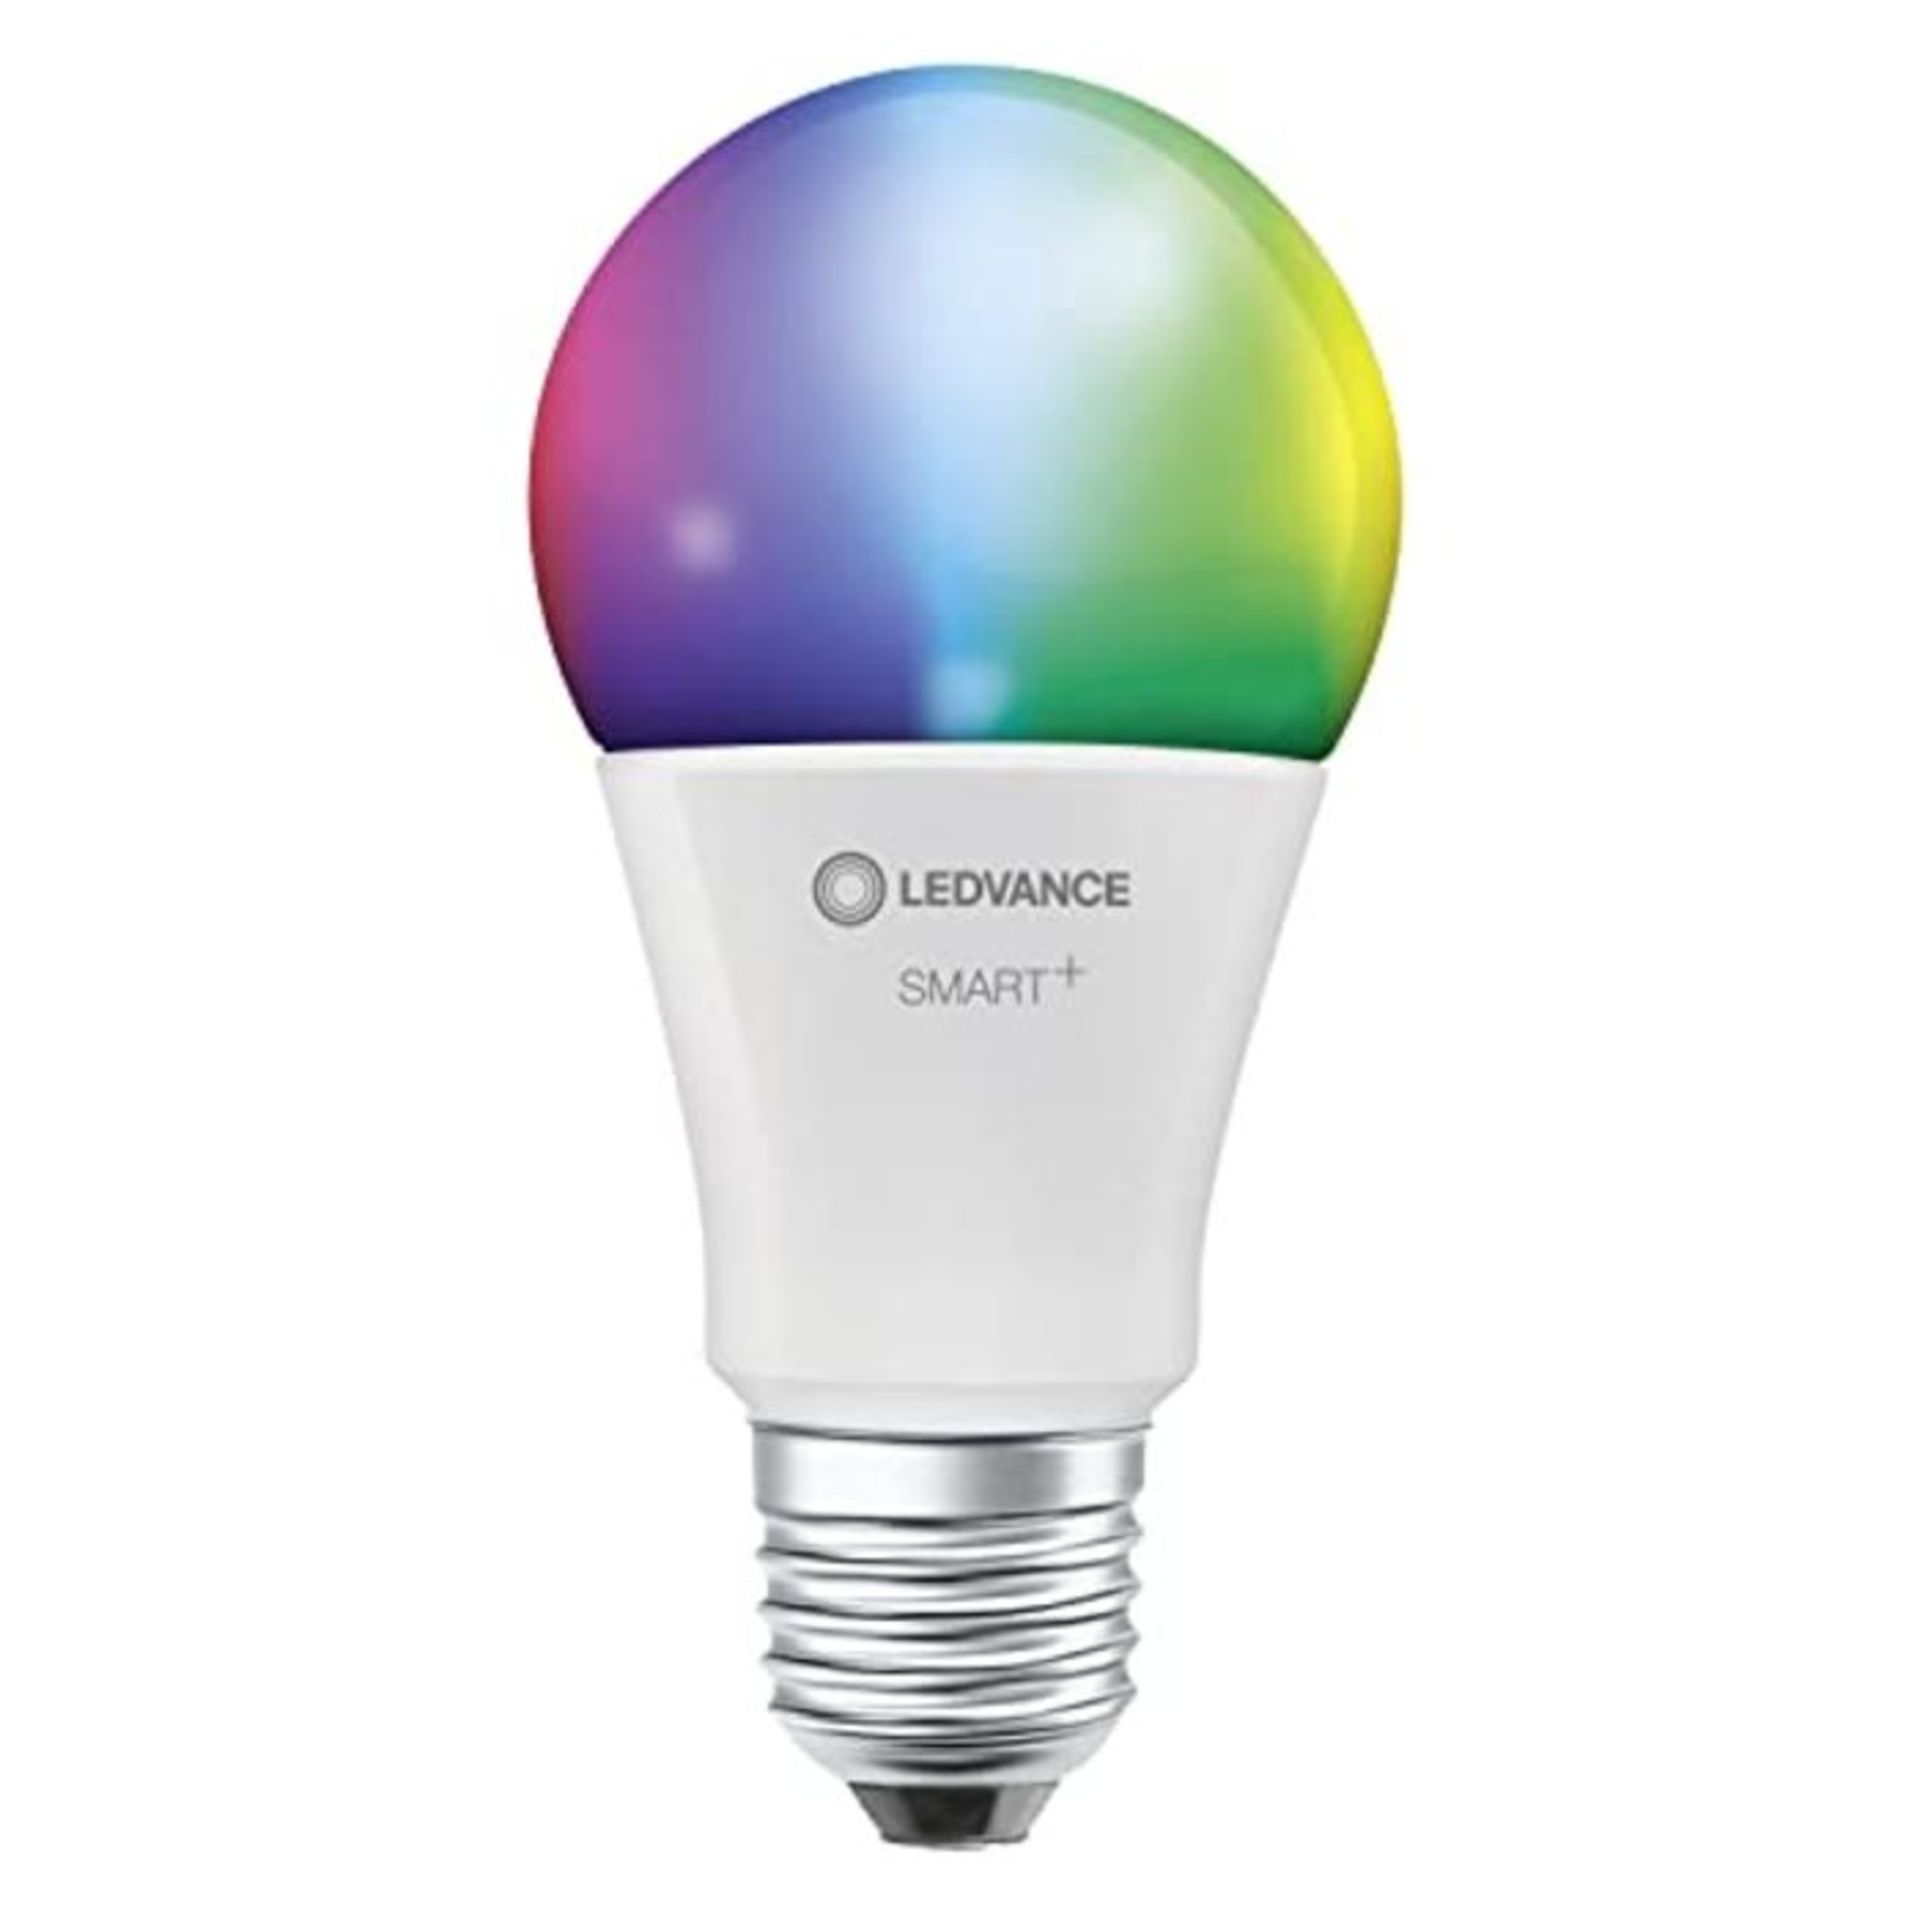 LEDVANCE Smarte LED-Lampe mit WiFi Technologie, Sockel E27, Dimmbar, Lichtfarbe Ã¤nd